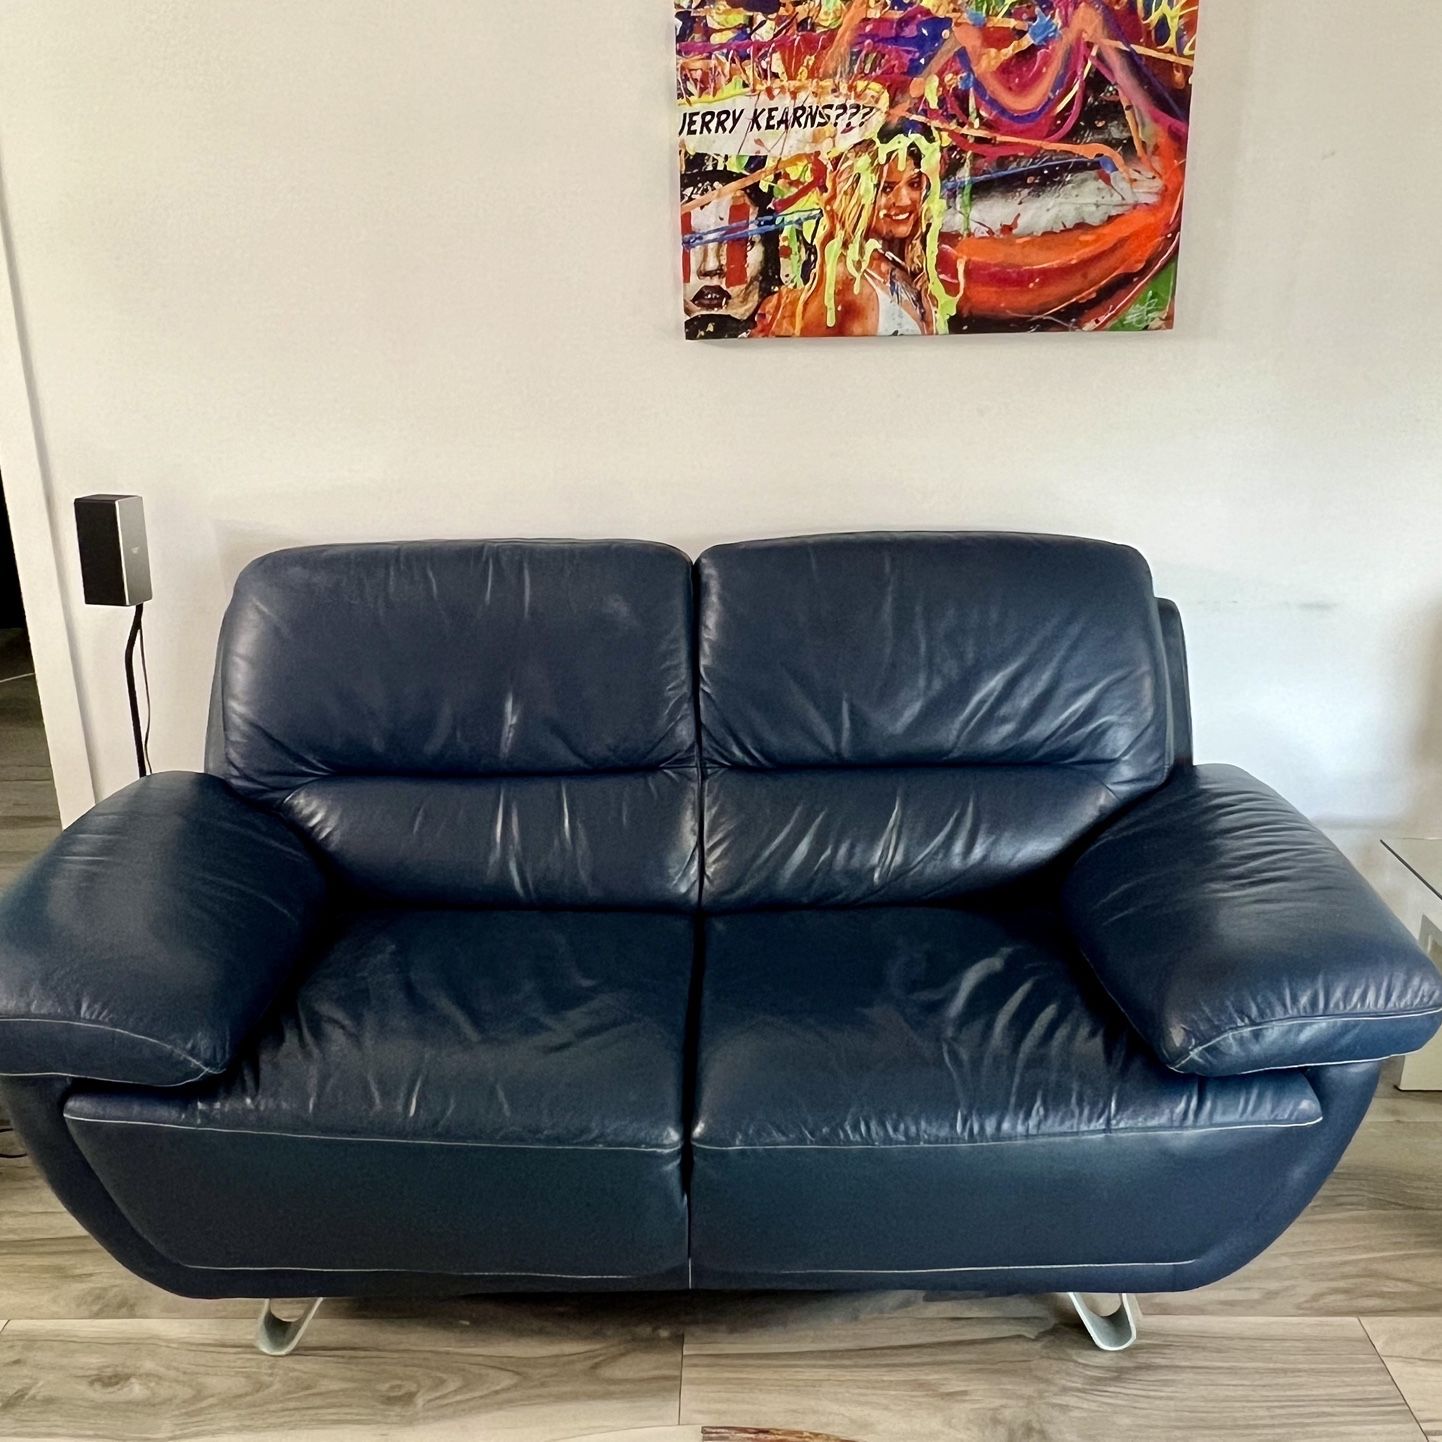 Italian Genuine Leather Sofa/Love Seat - Blue